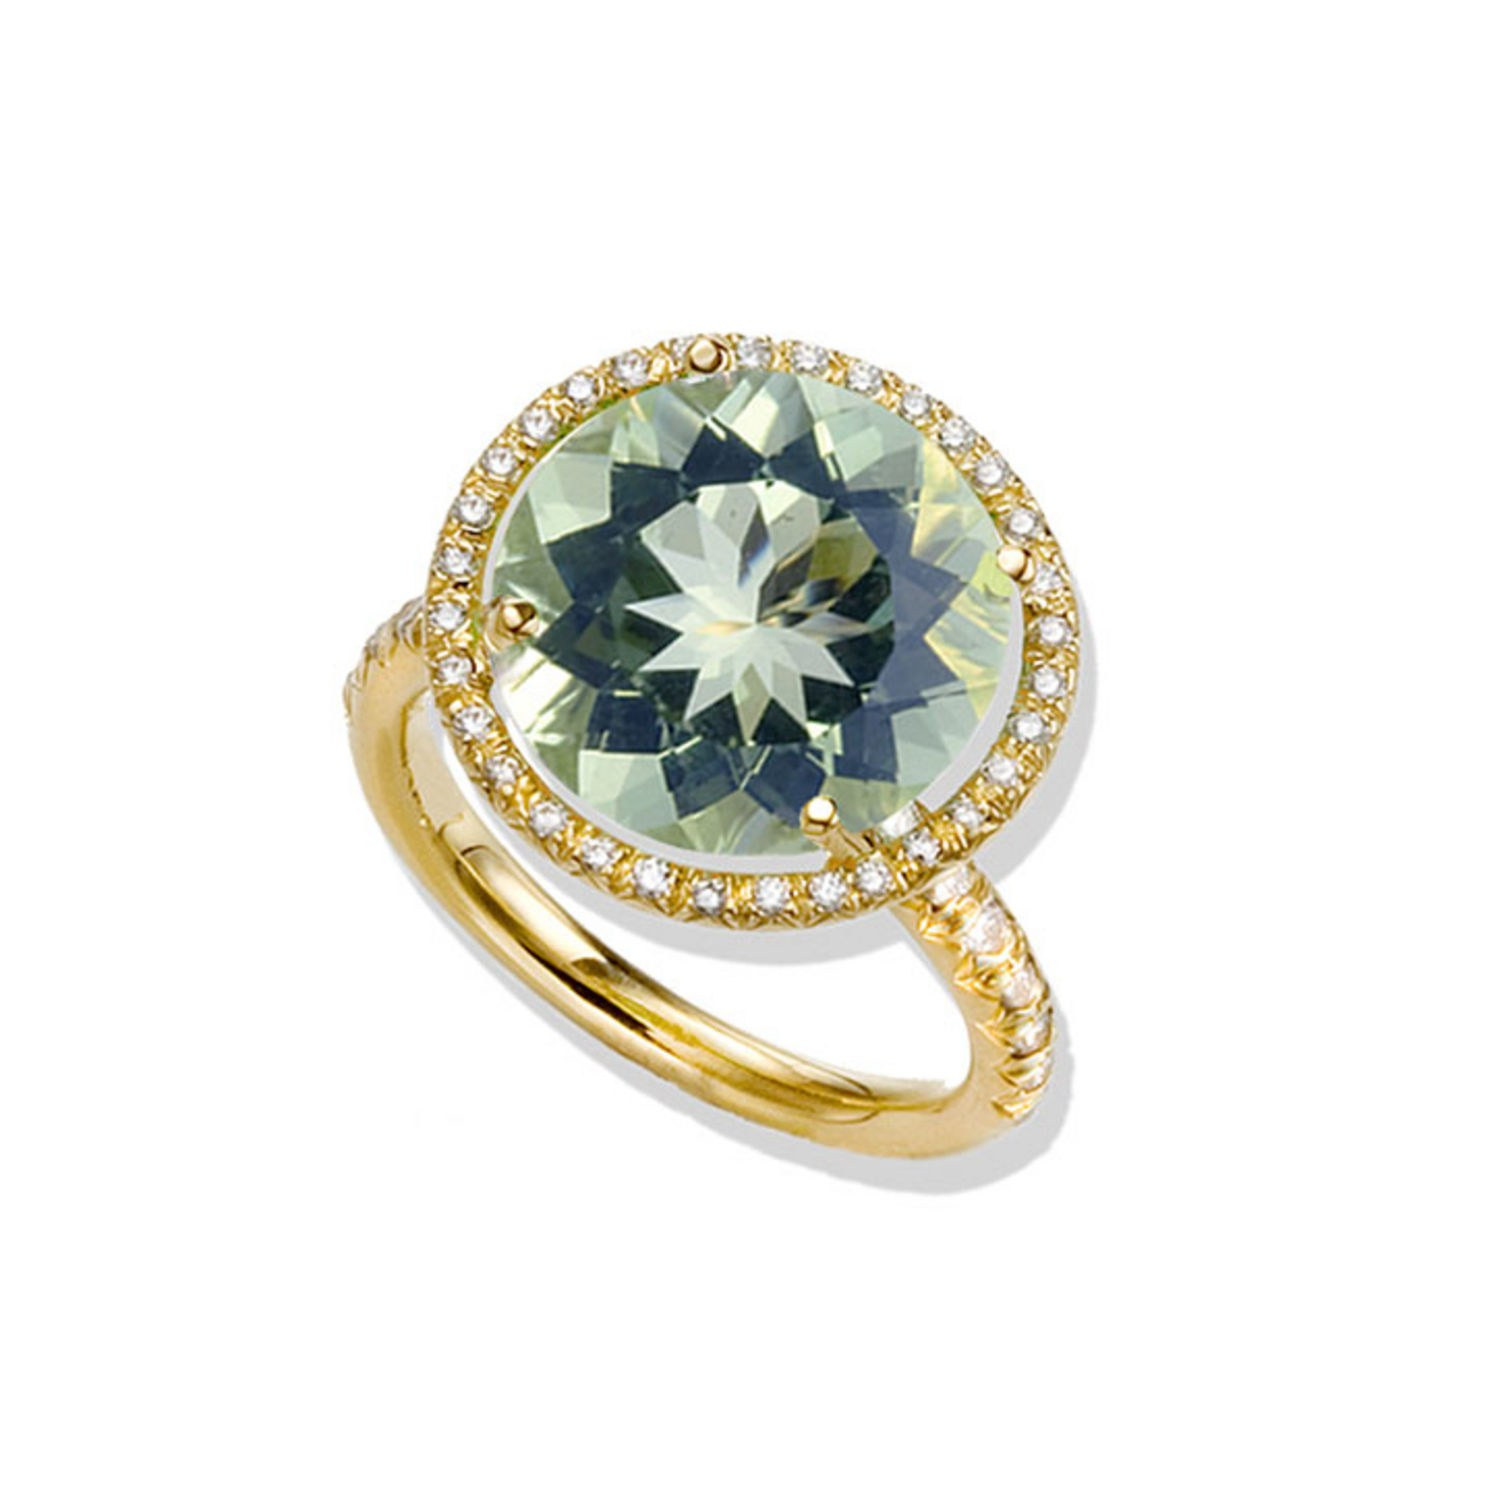 Colored Diamond Engagement Rings
 Unique Engagement Rings Colored Gemstone Engagement Rings